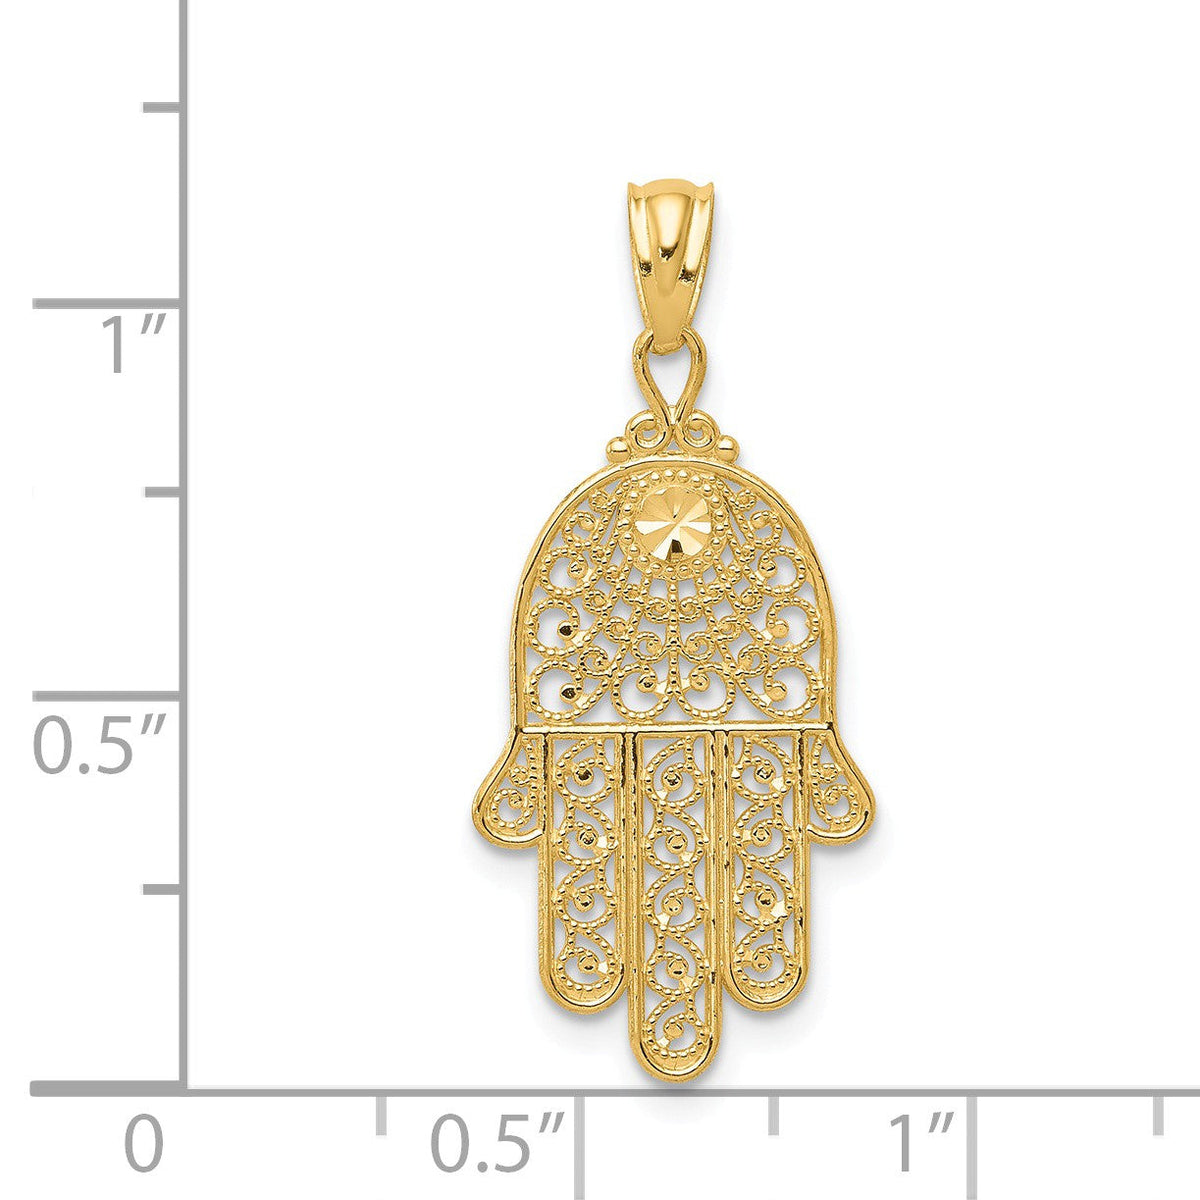 Alternate view of the 14k Yellow Gold Diamond-Cut Filigree Hamsa Pendant, 13 x 29mm by The Black Bow Jewelry Co.